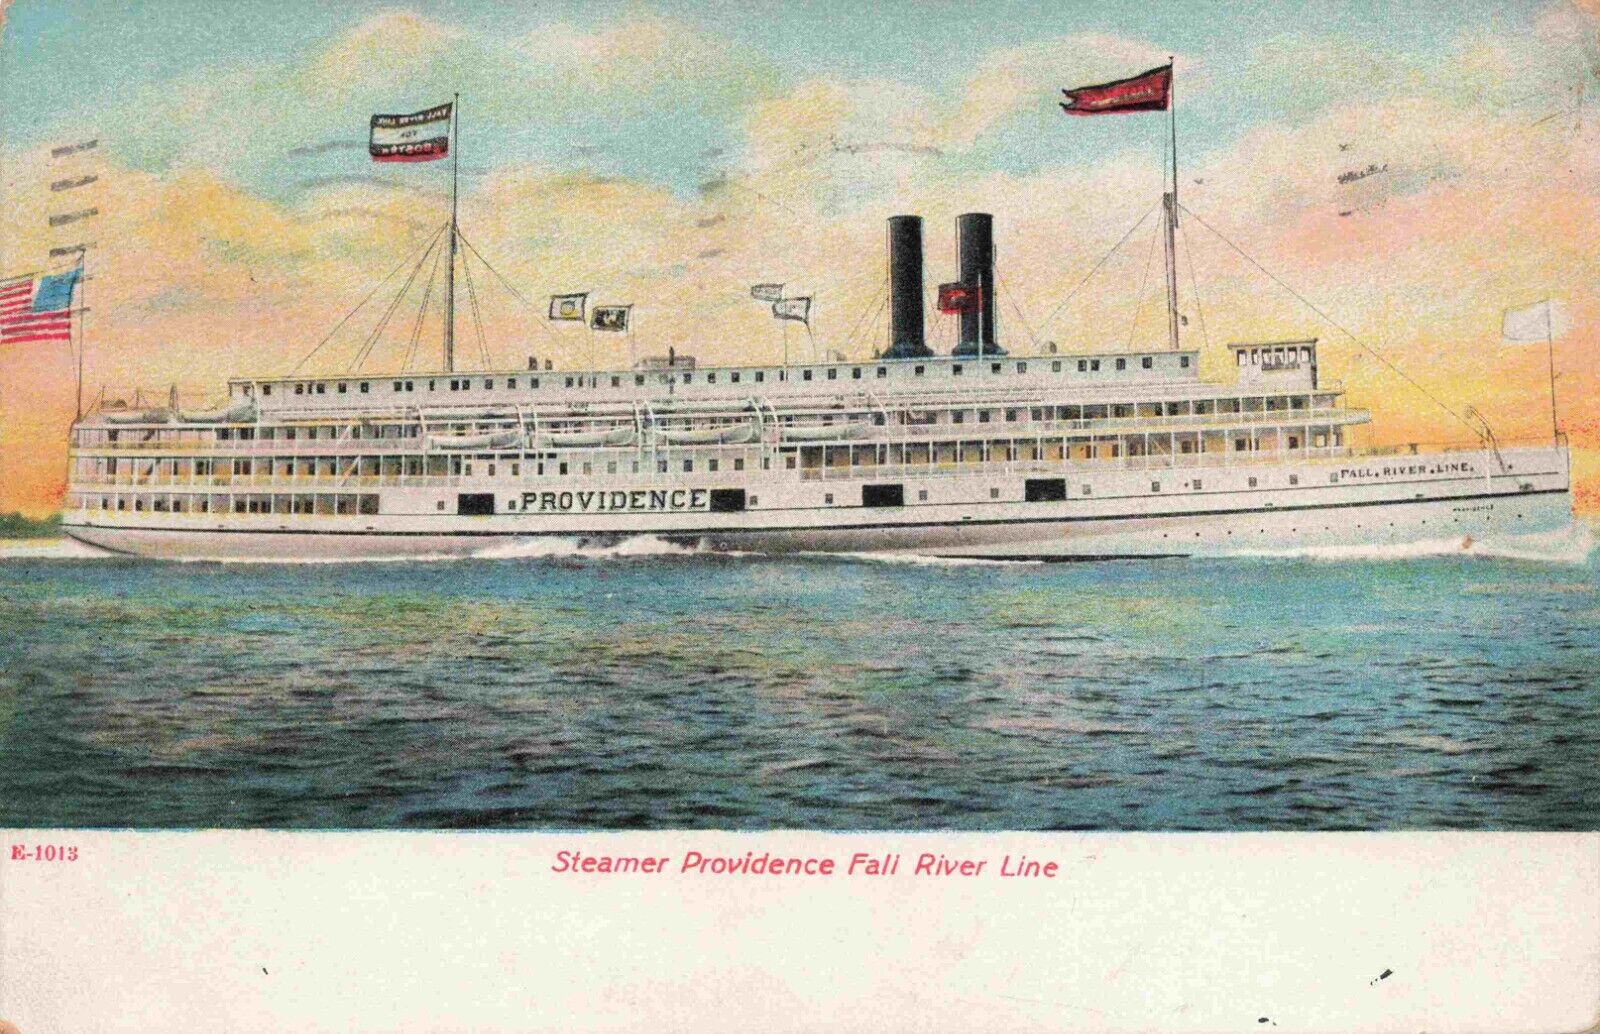 Steamer Providence Fall River Line Sender Says Rough Seas Card #E-1013 Postcard